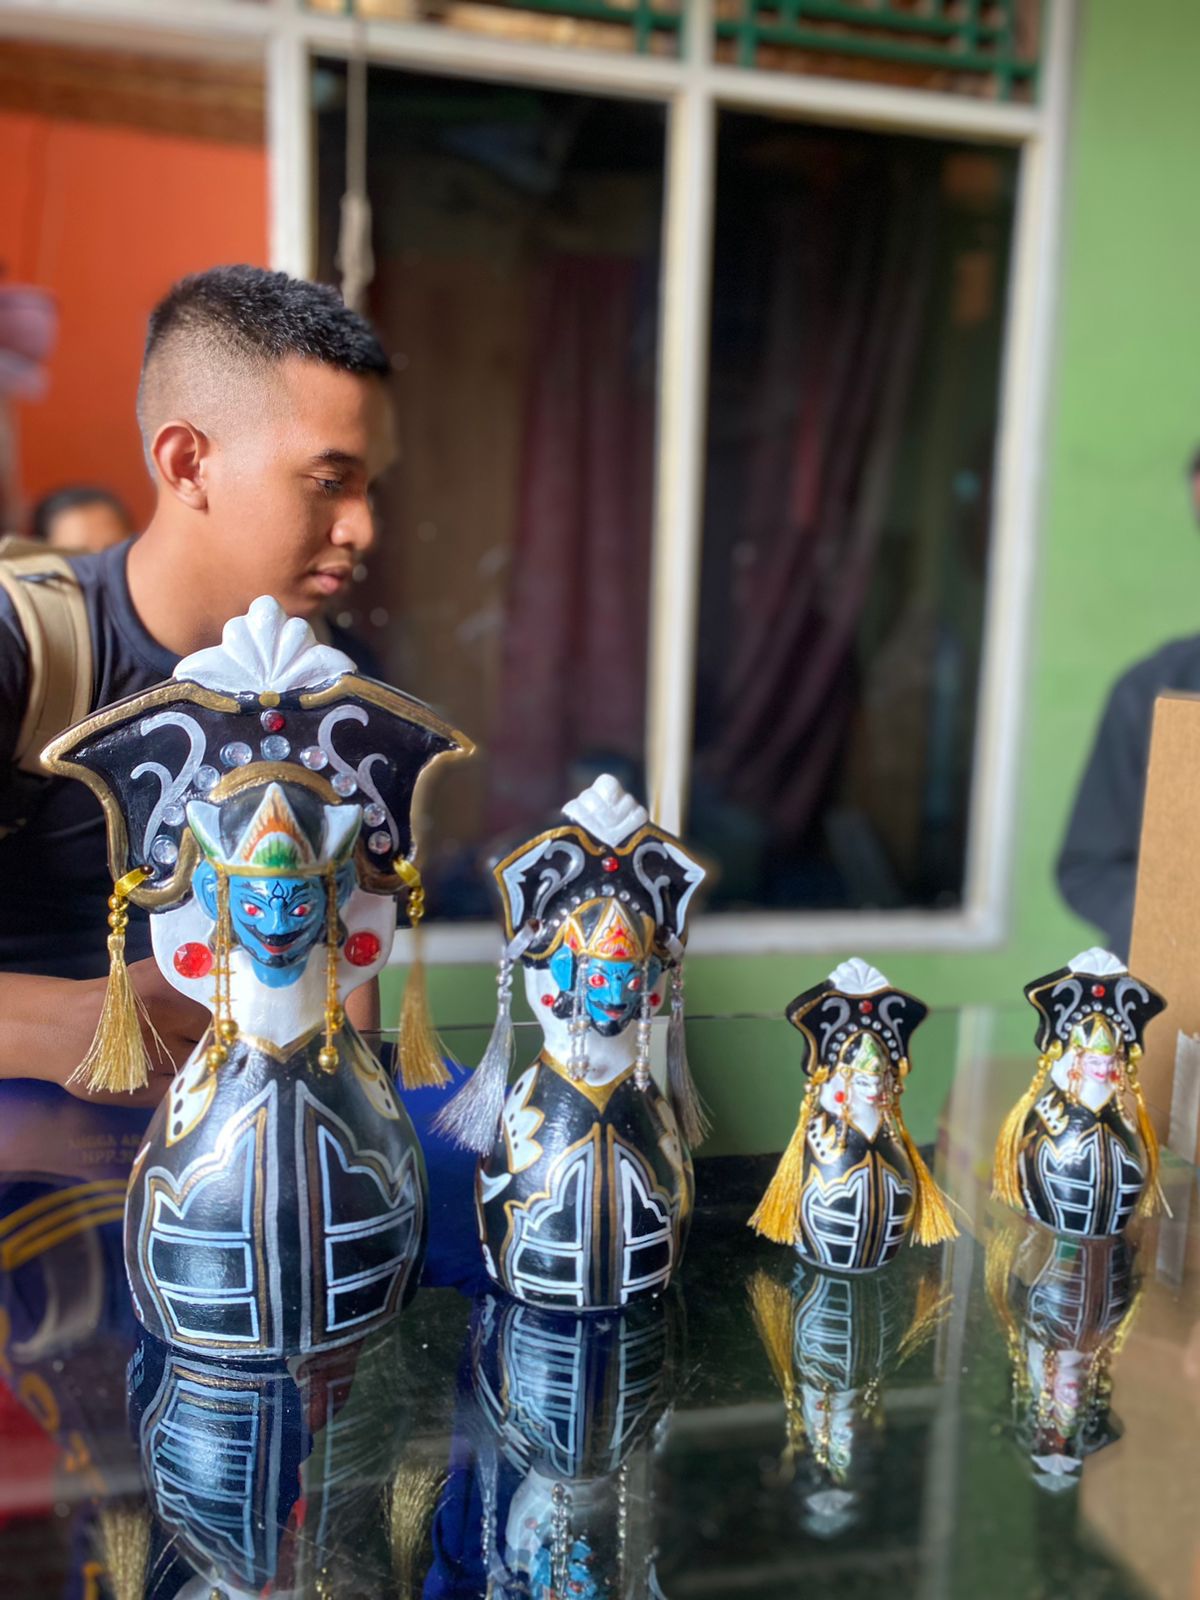 Apa Lagi Nih yang Menarik di Citra? Karya Patung Eksklusif: Seni Tangan Pak Jajang di Desa Cianting Utara, Sukatani, Pur